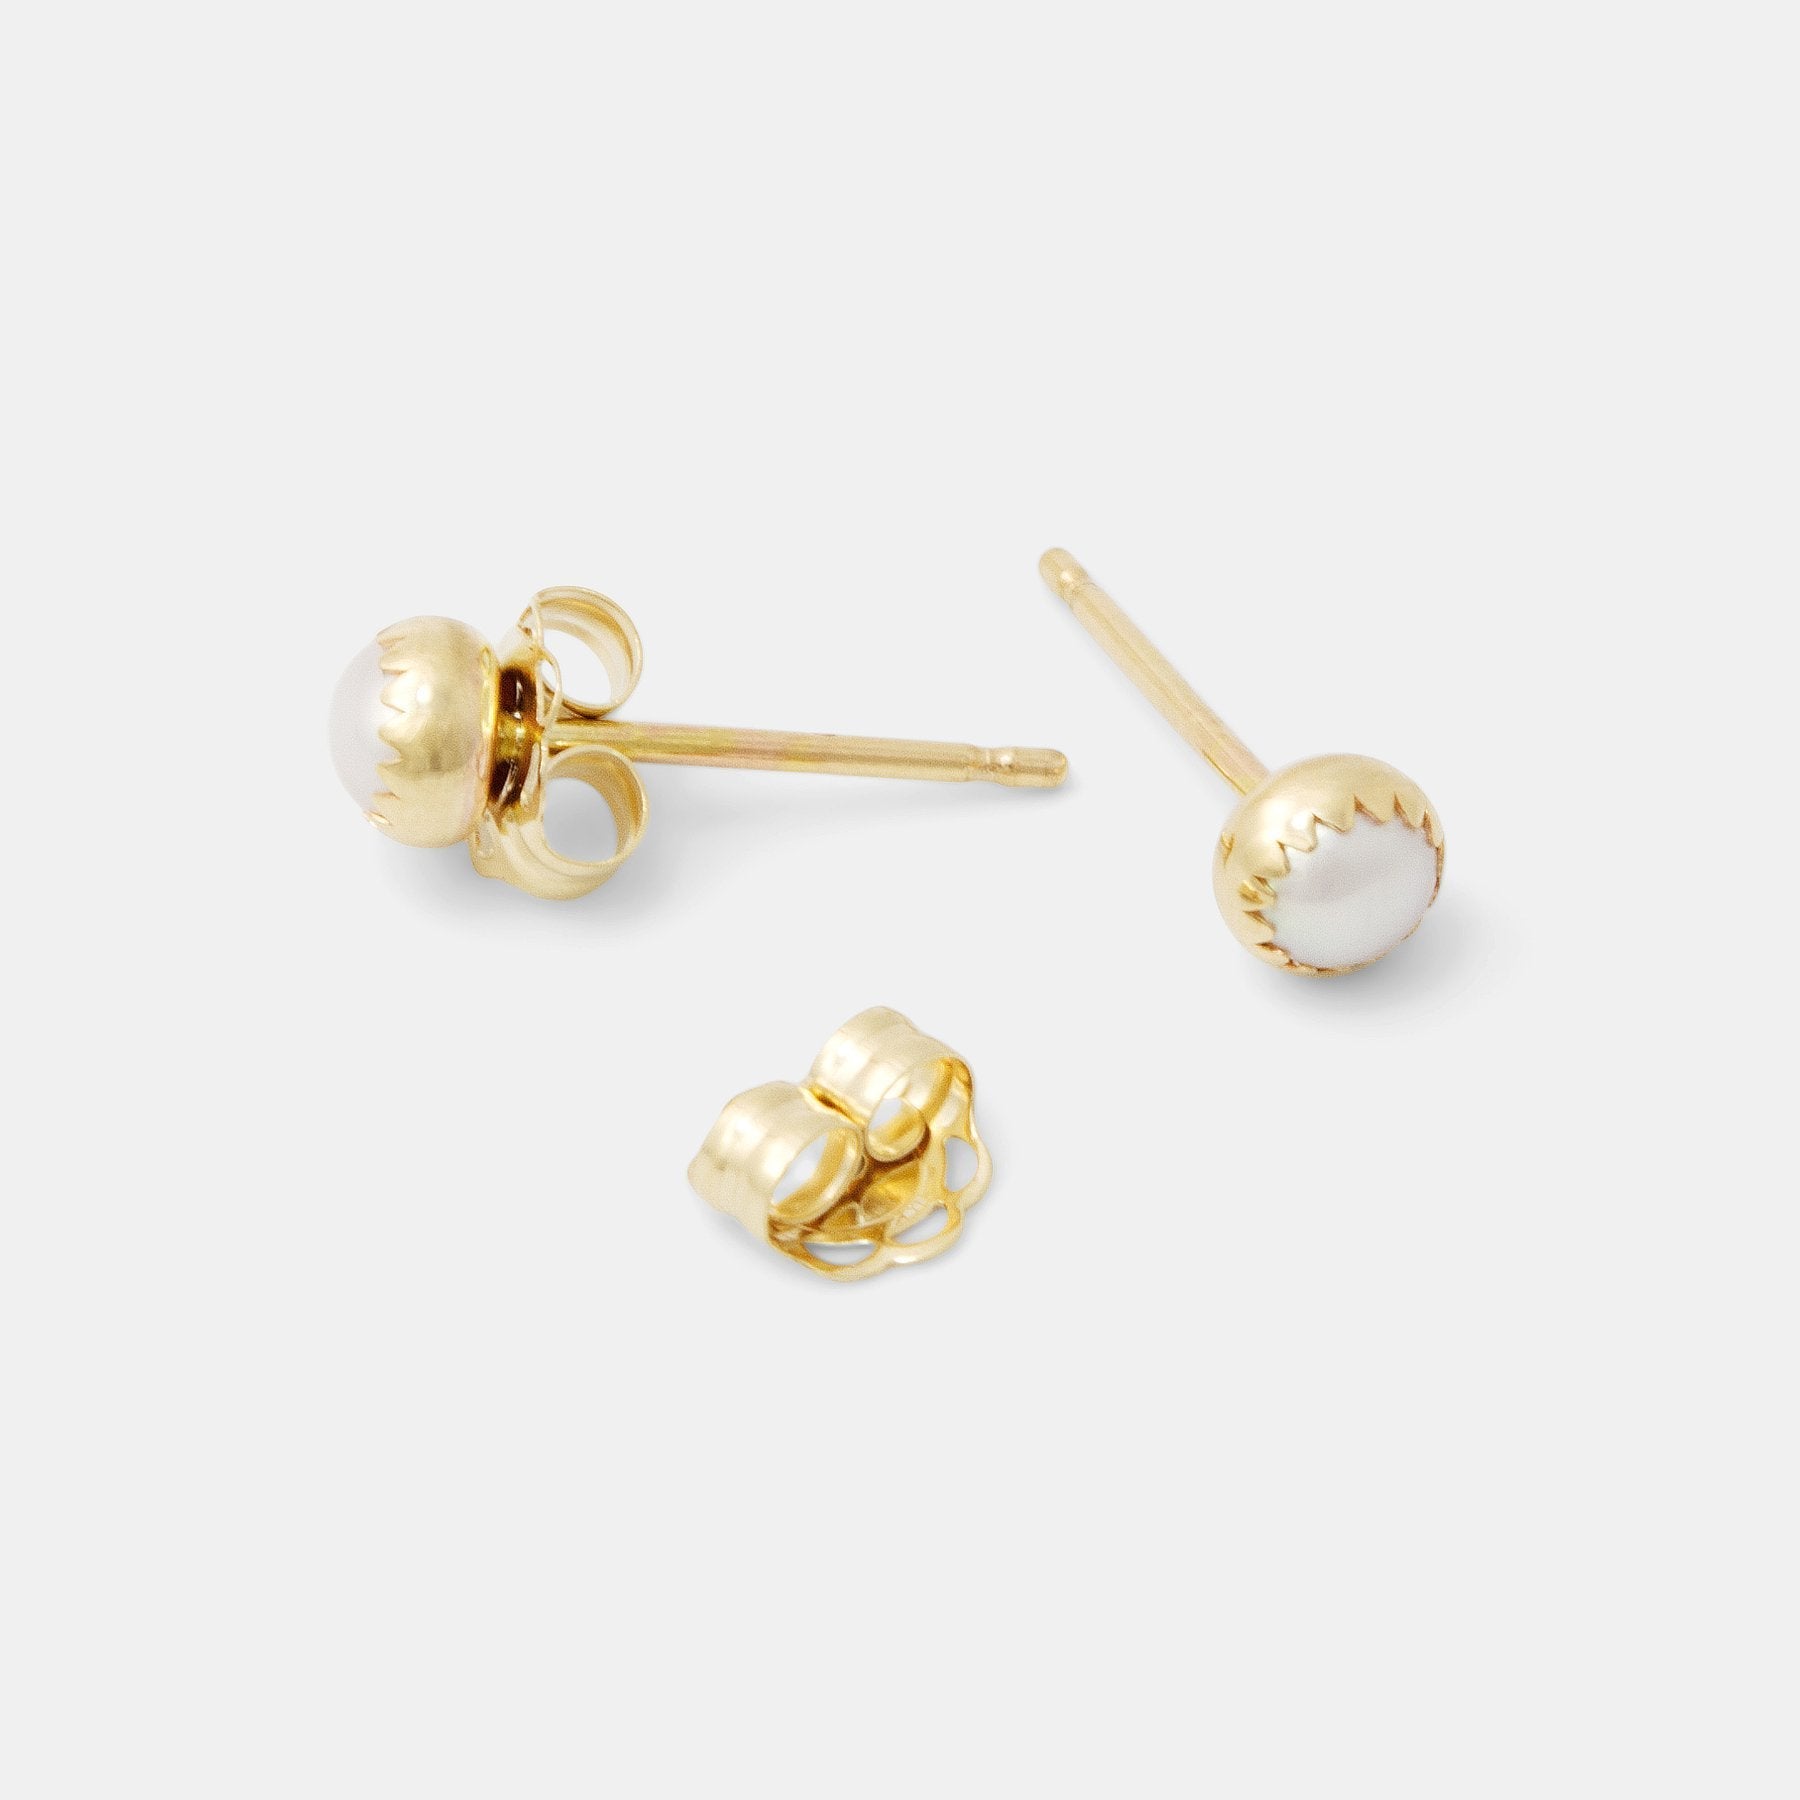 Pearl & solid gold stud earrings - Simone Walsh Jewellery Australia